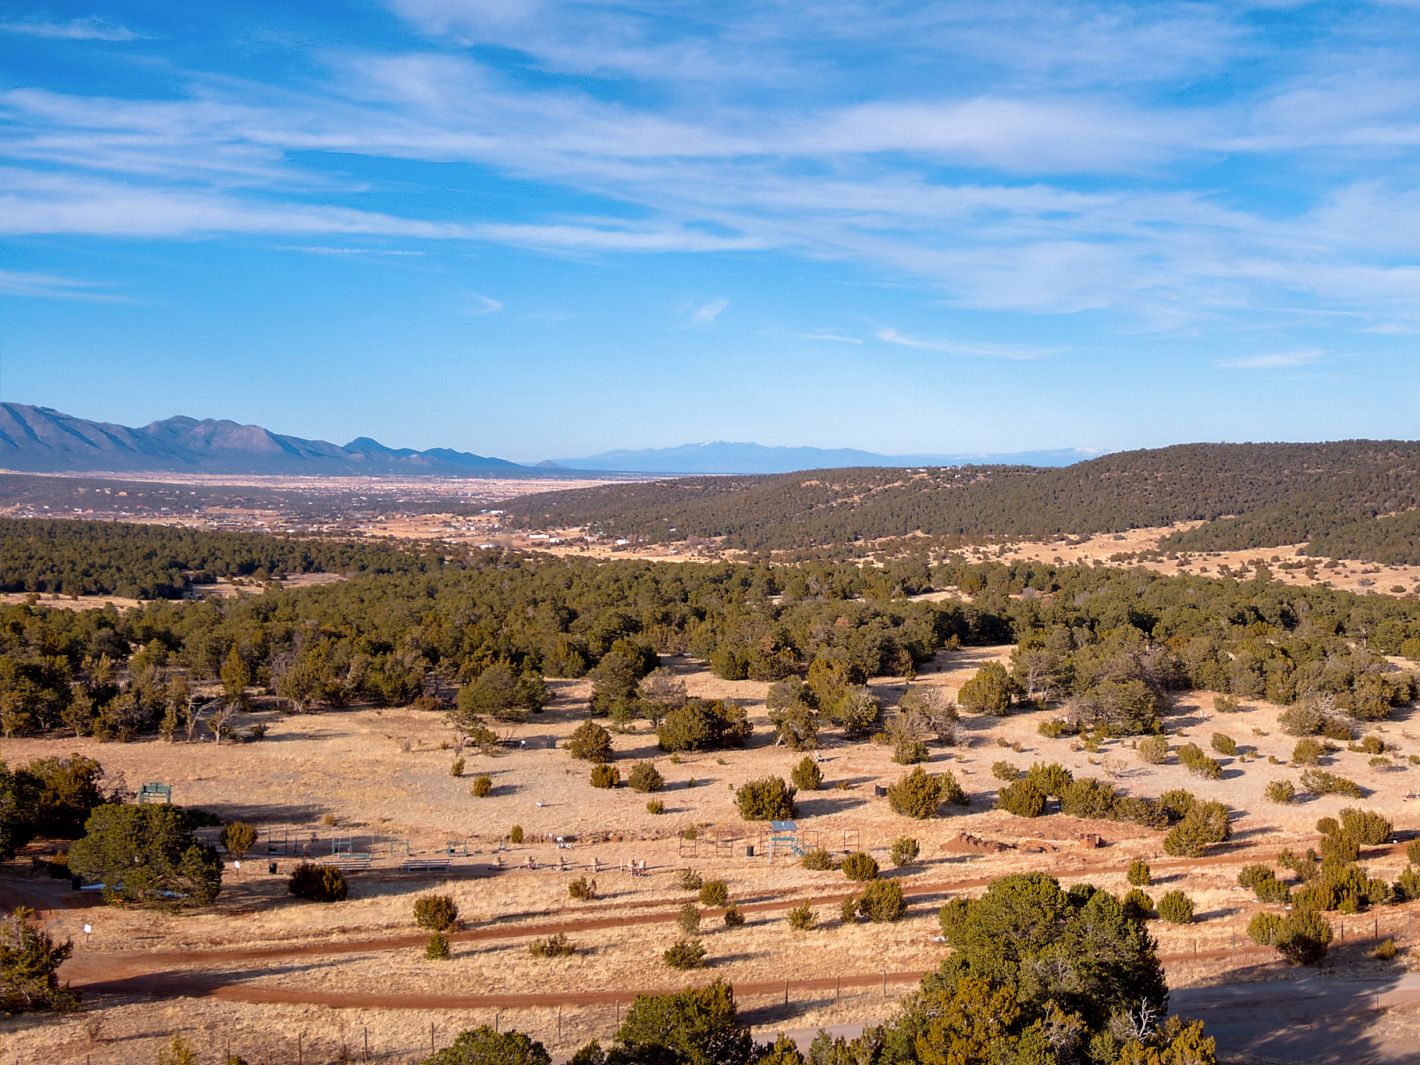 480 Acres of Recreational Land & Farm Edgewood, New Mexico, NM